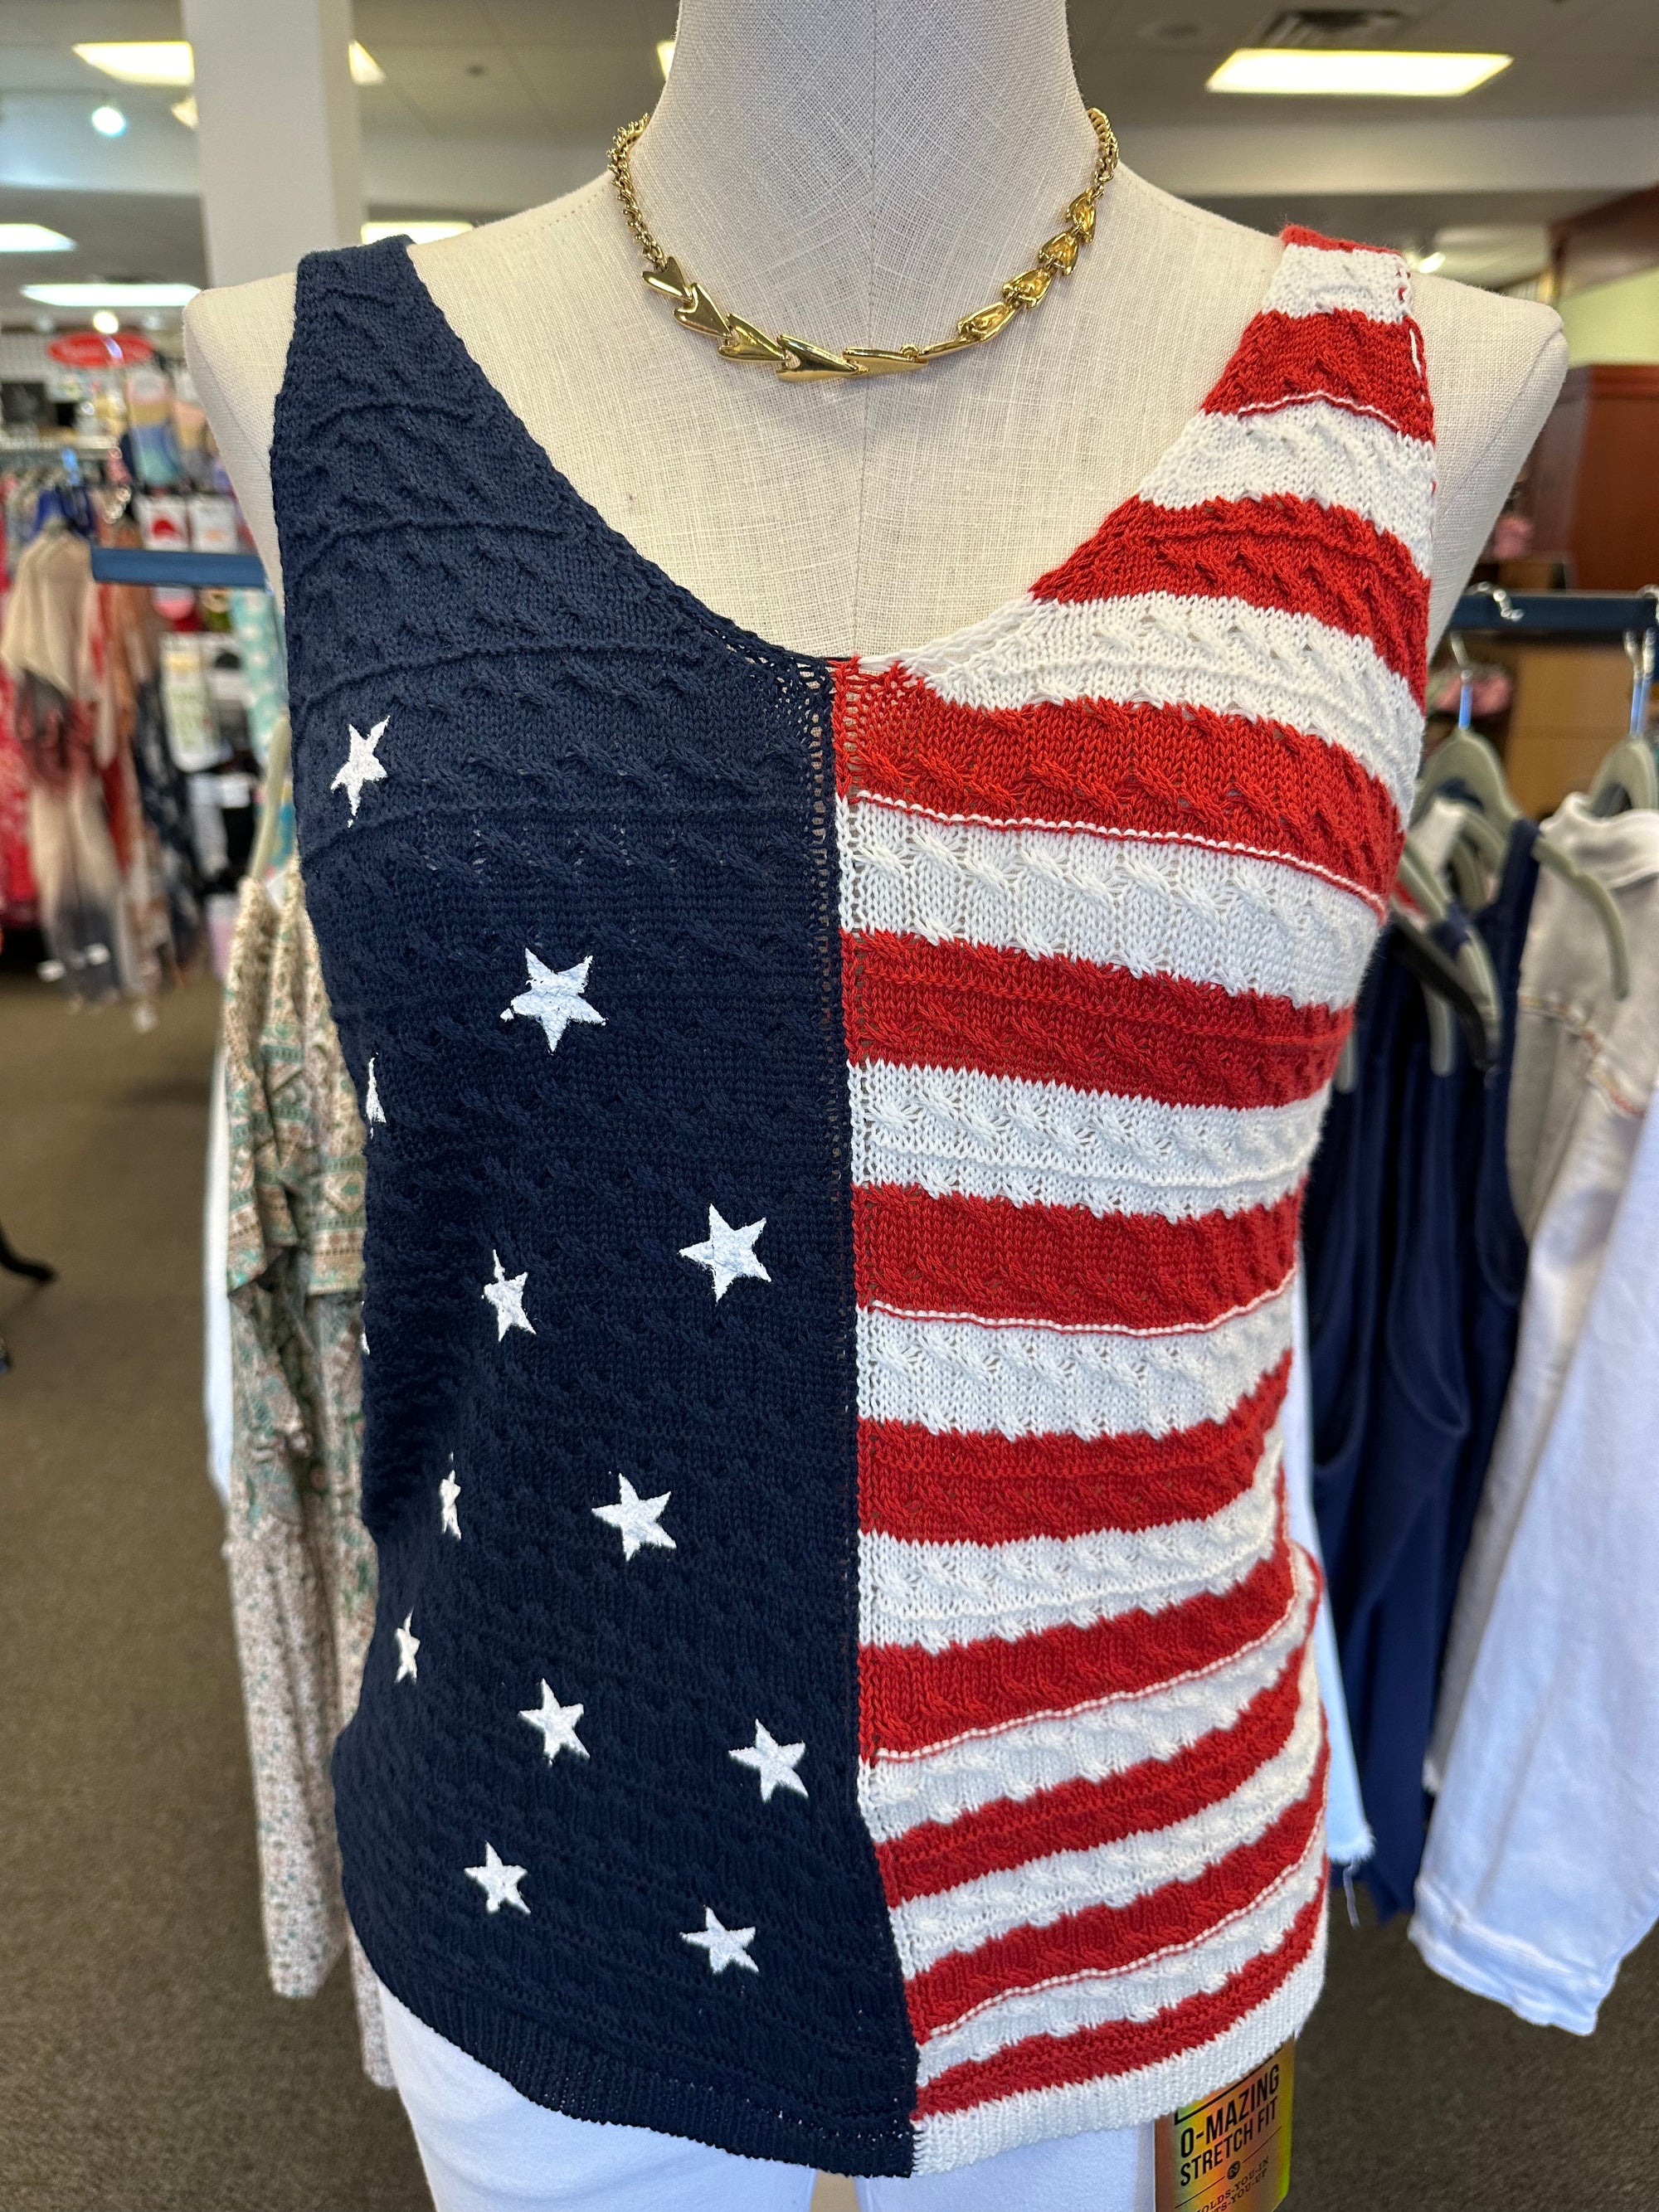 American Flag Tank Sweater Top